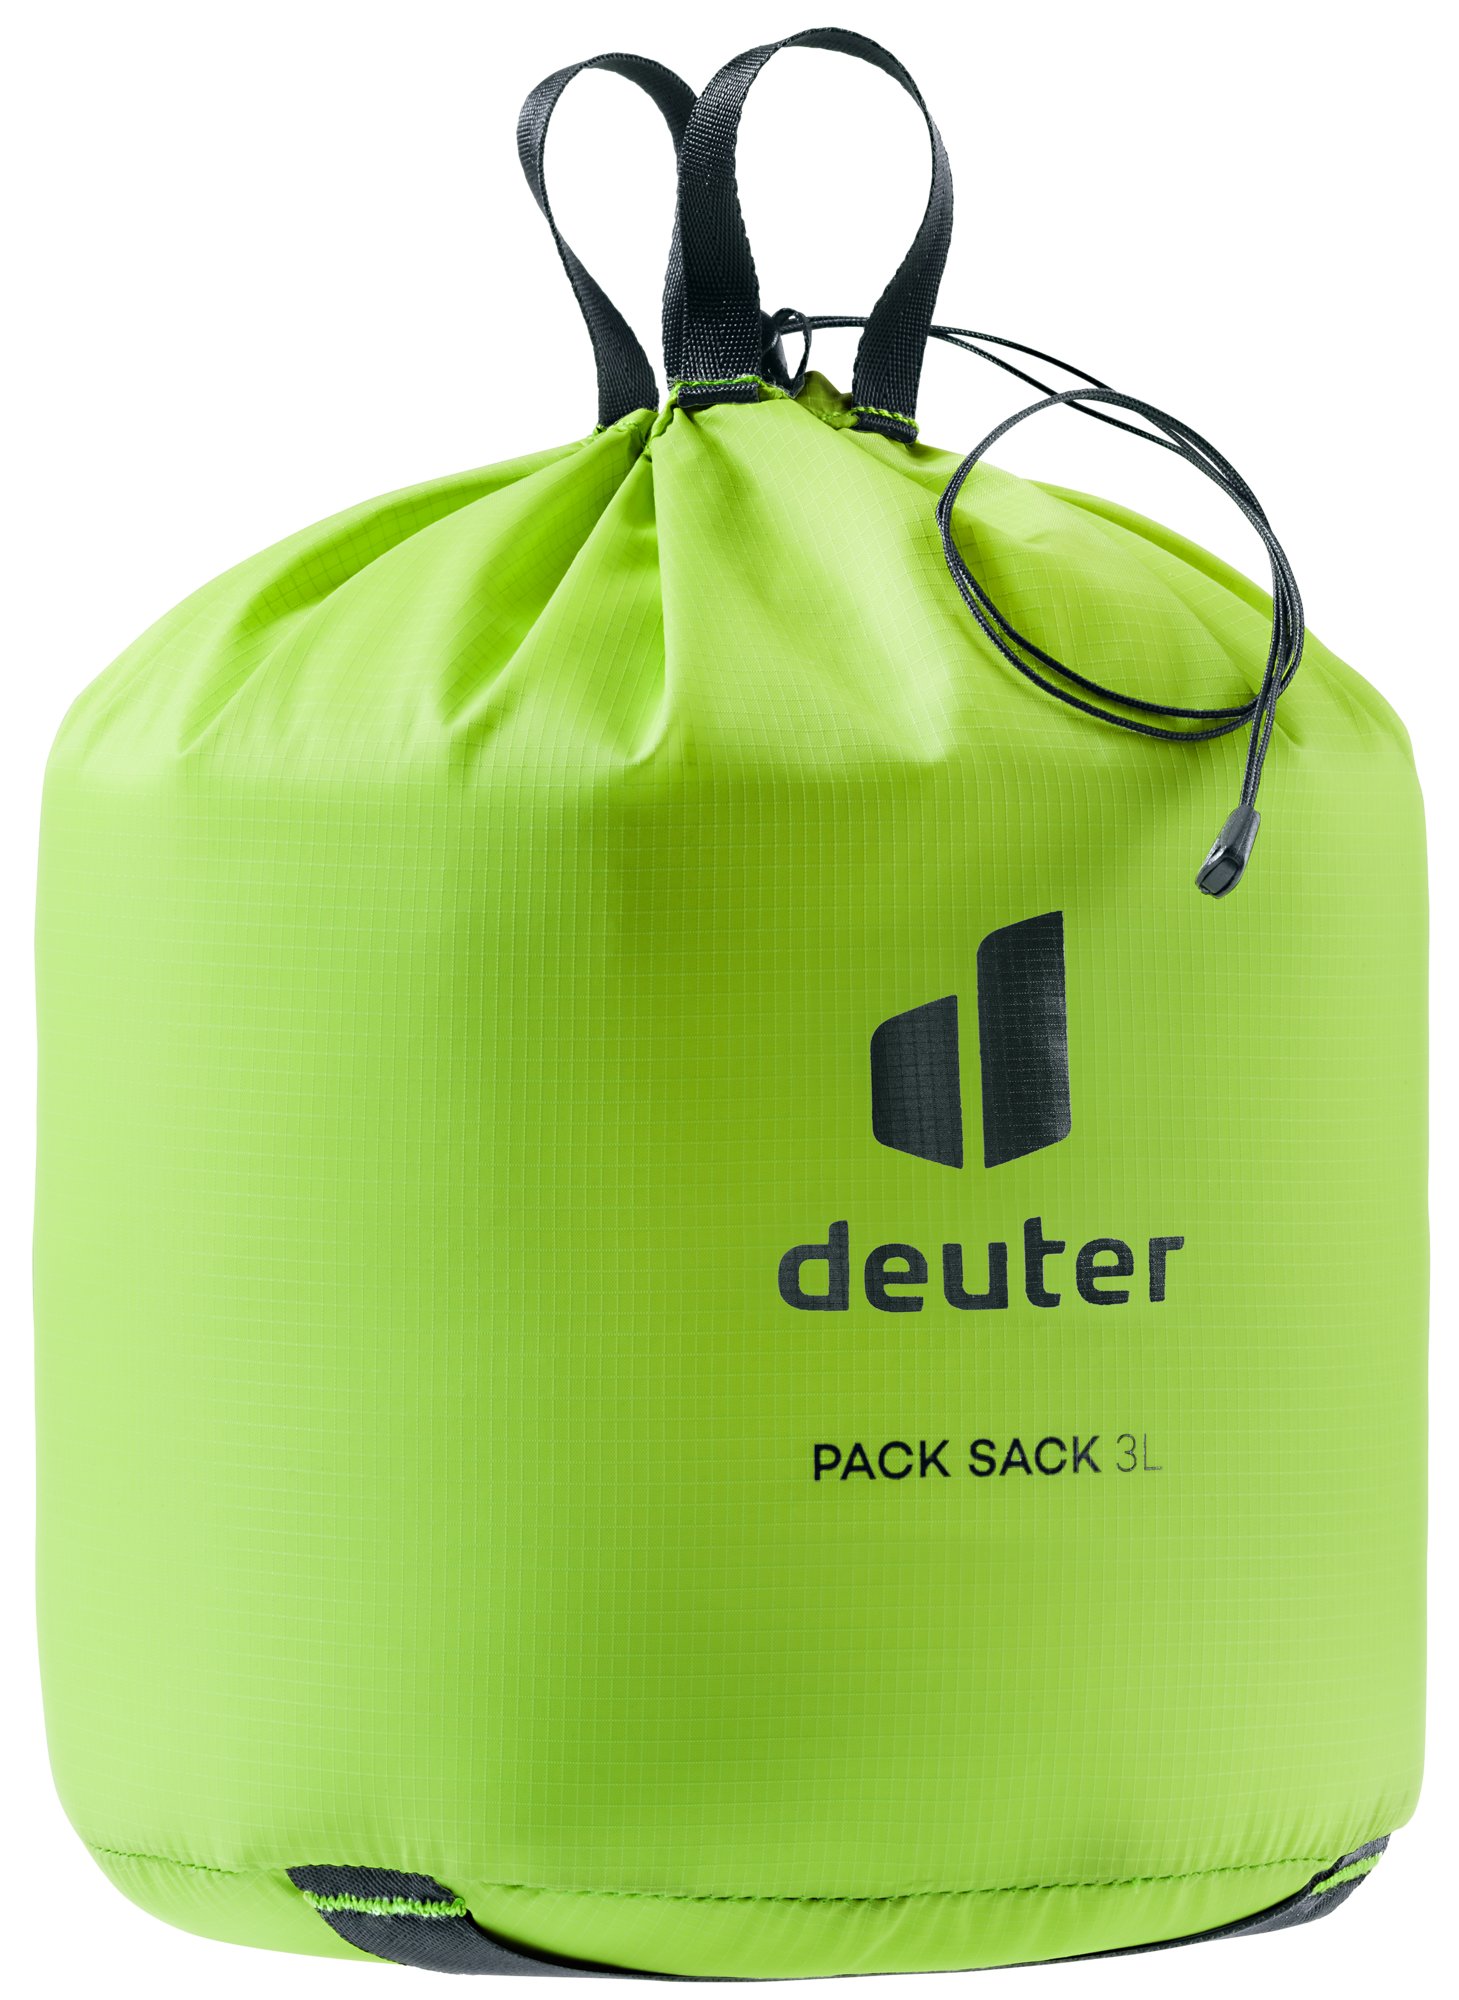 Deuter - Pack Sack 3, Packtasche